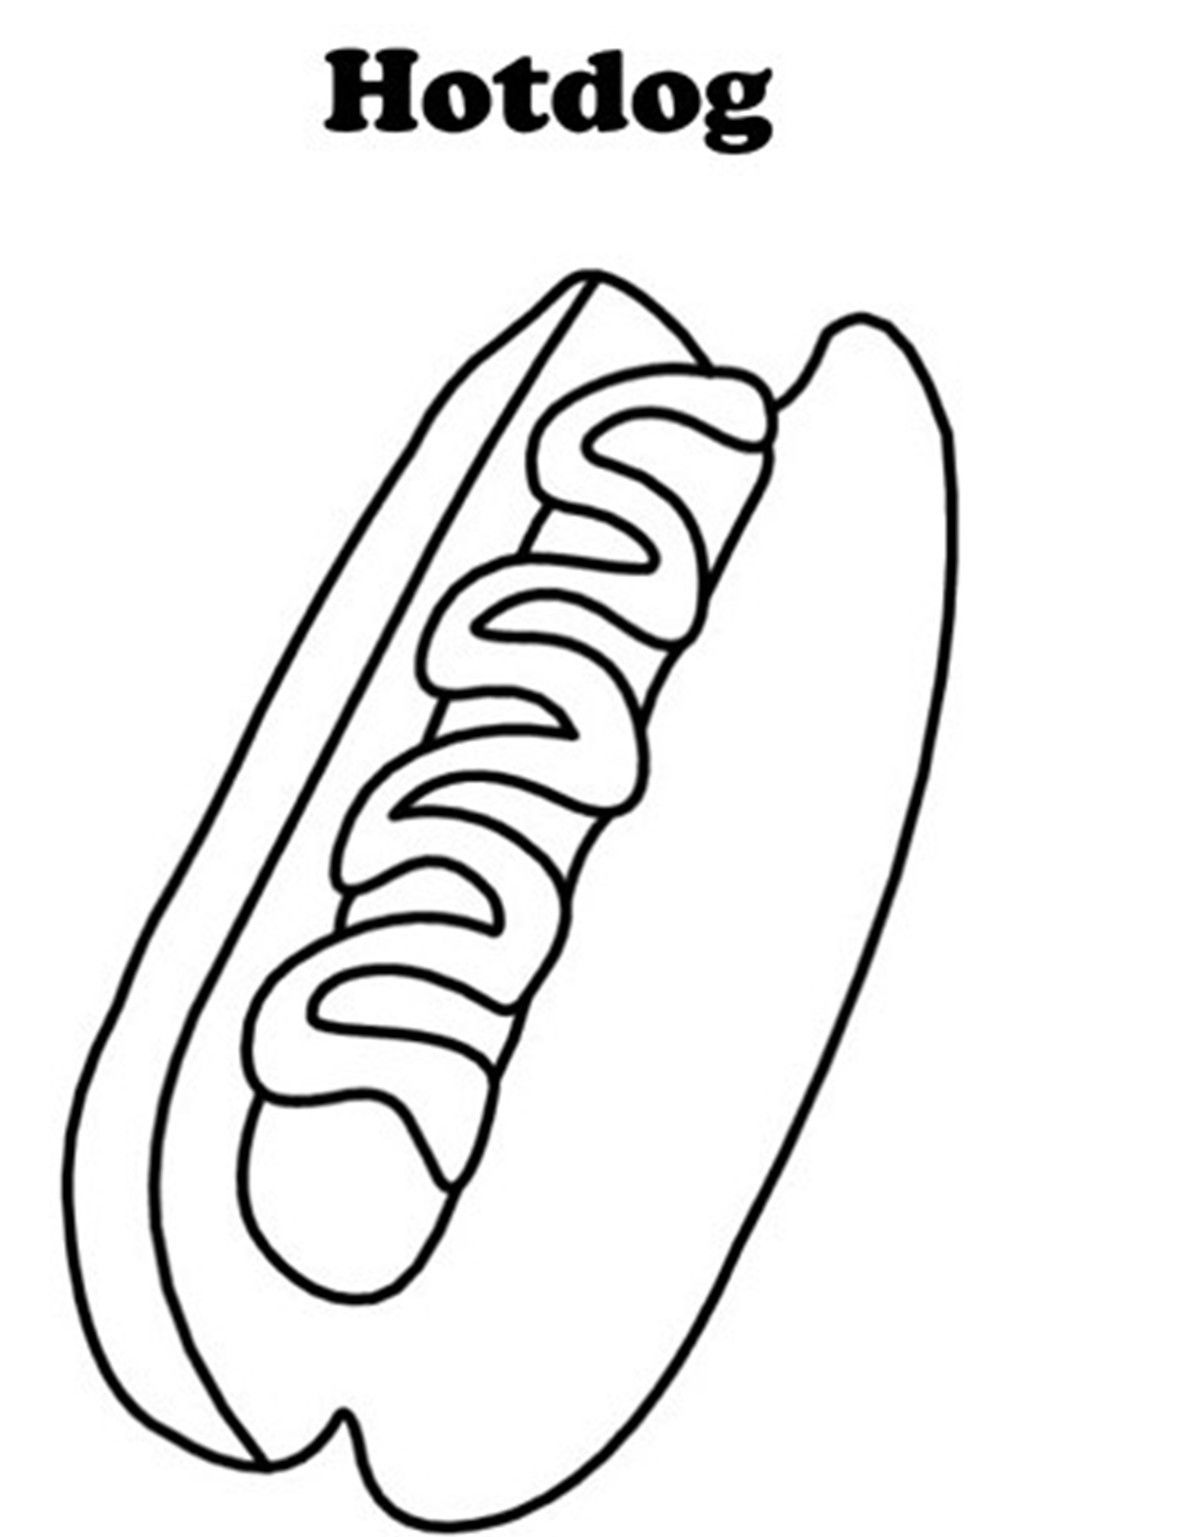 hotdog clipart coloring page